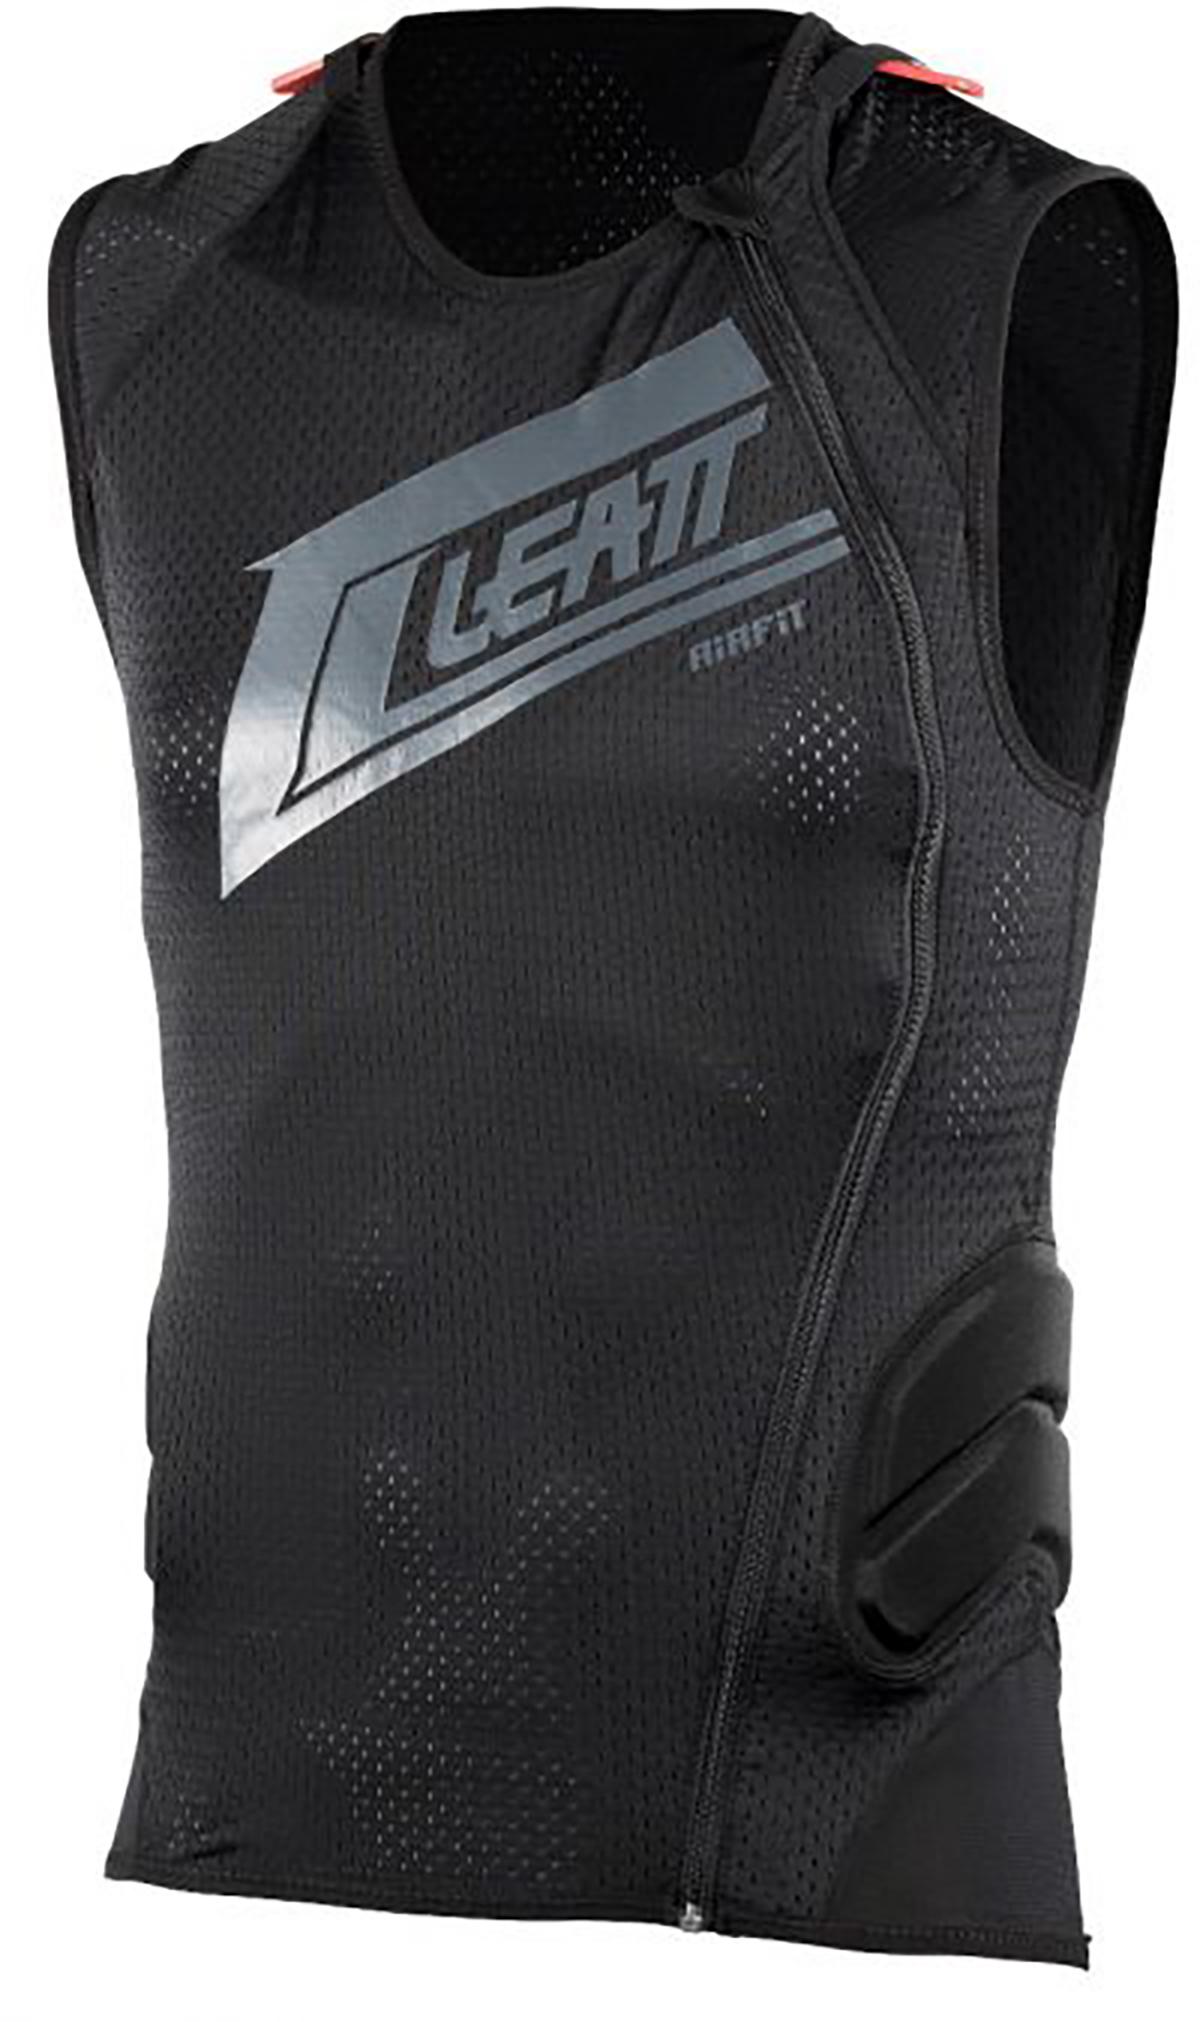 Leatt 3df Back Protector - Black